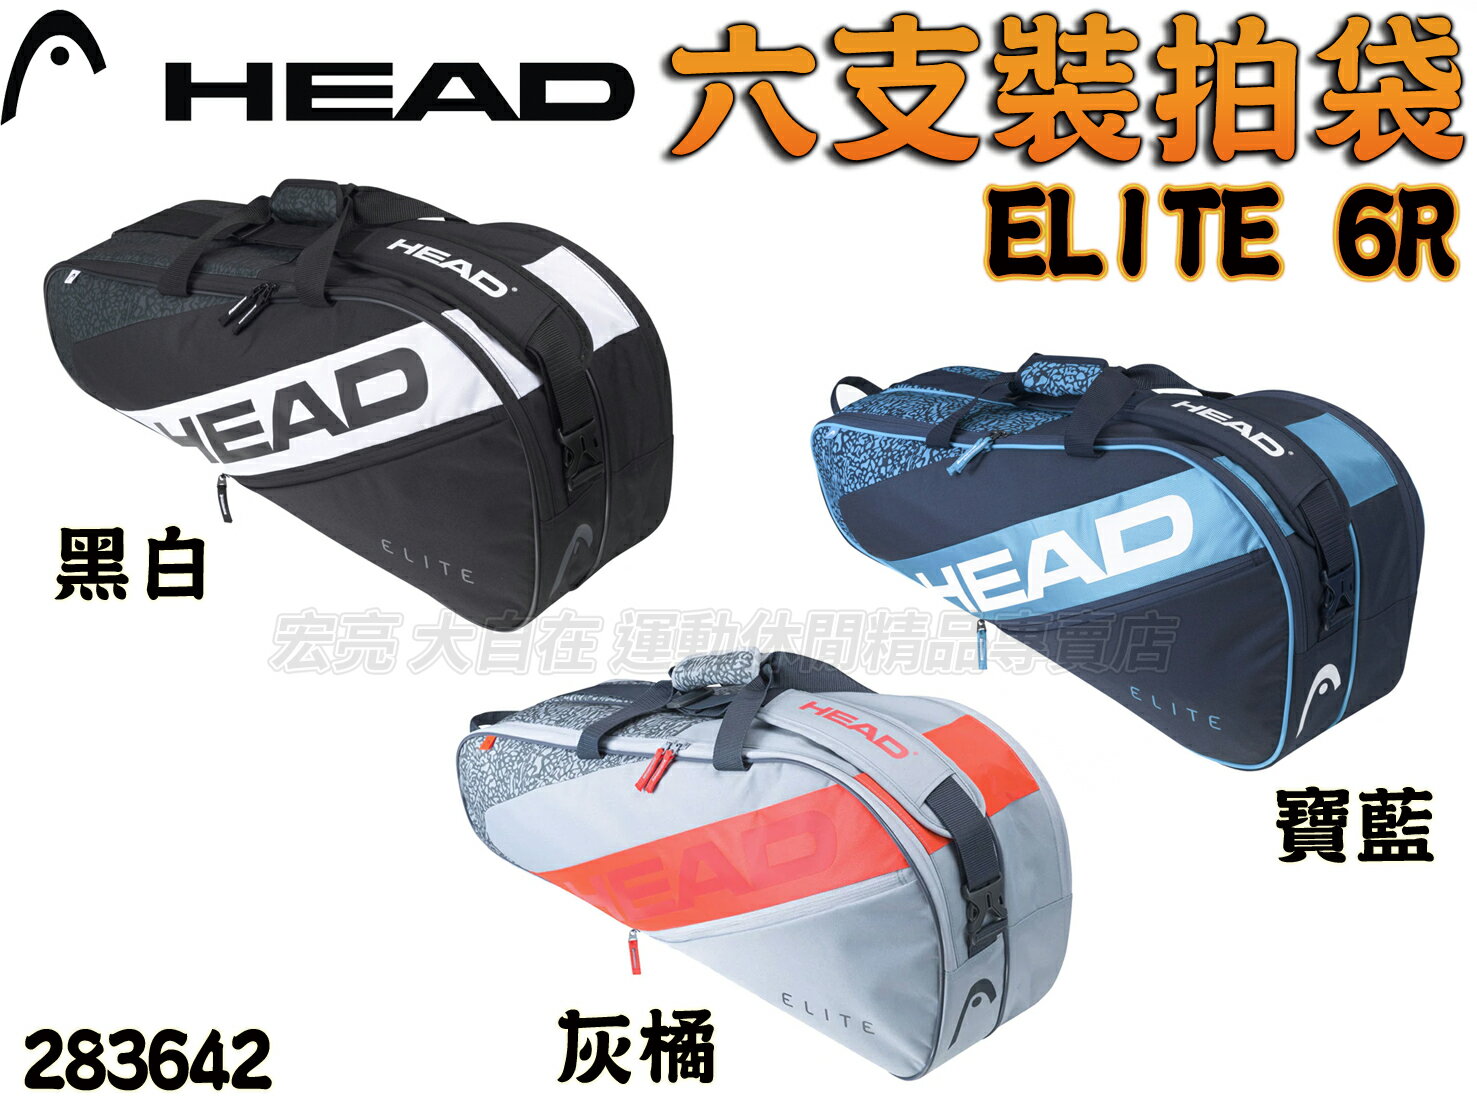 HEAD ELITE 6R COMBI 網球拍 網球拍袋 網球袋 裝備袋 6支裝 單肩 斜背 283642 大自在